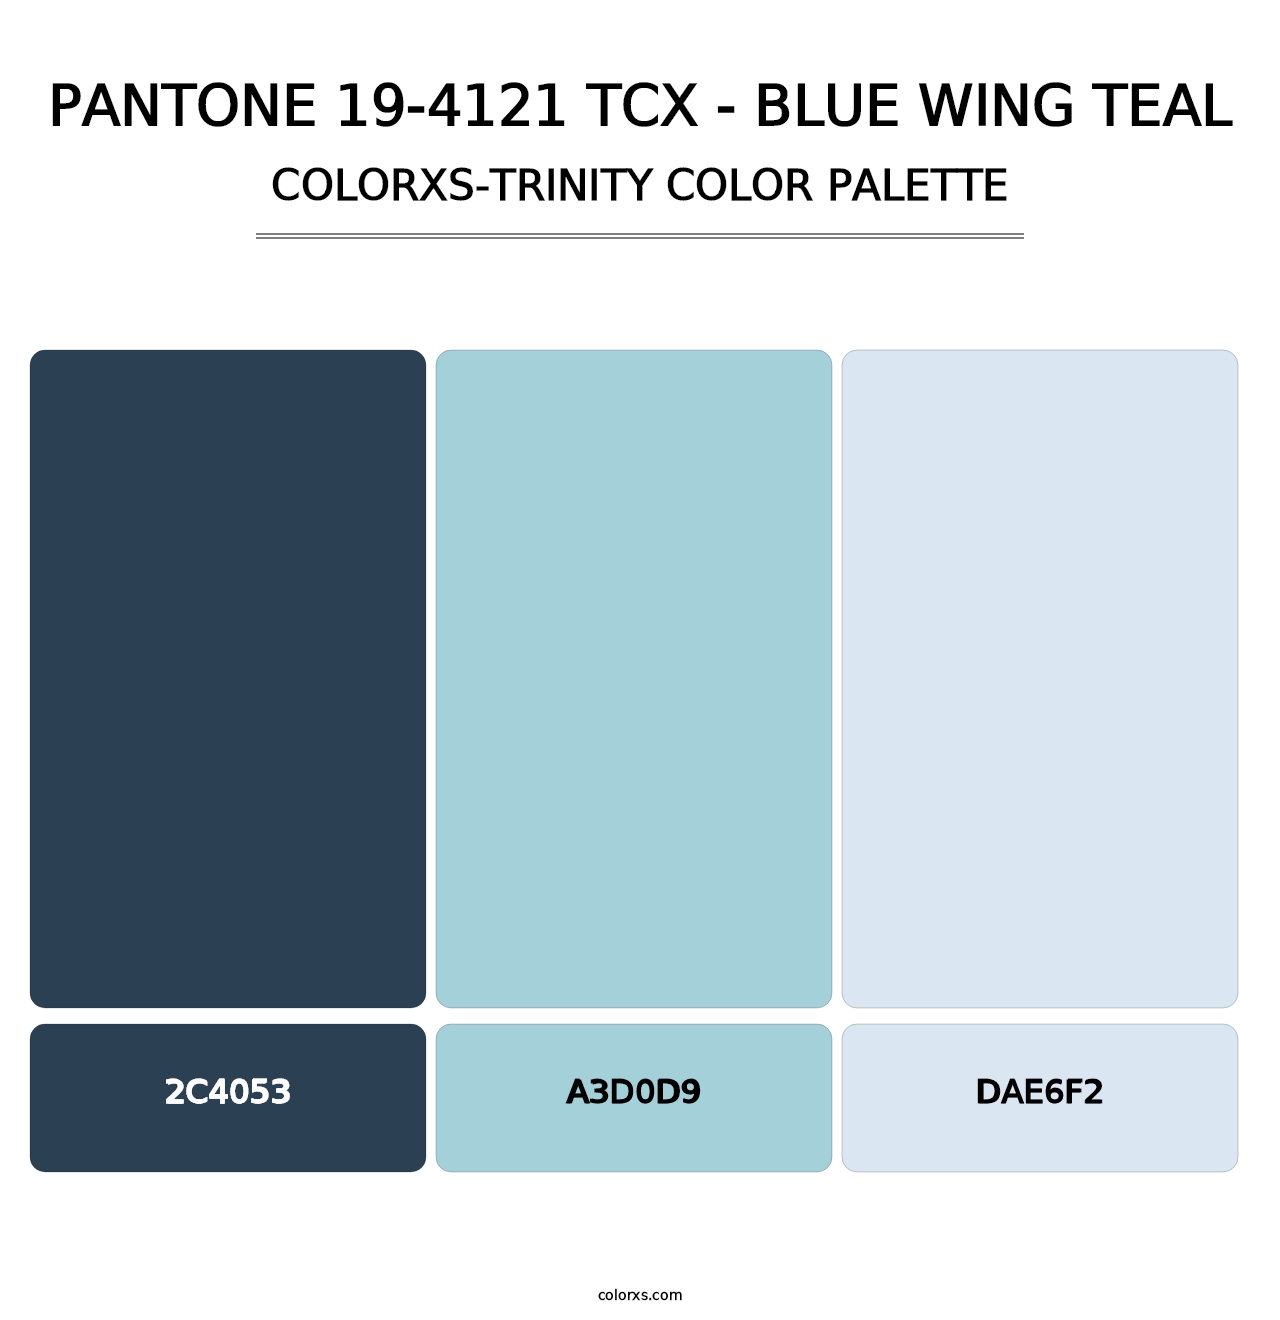 PANTONE 19-4121 TCX - Blue Wing Teal - Colorxs Trinity Palette